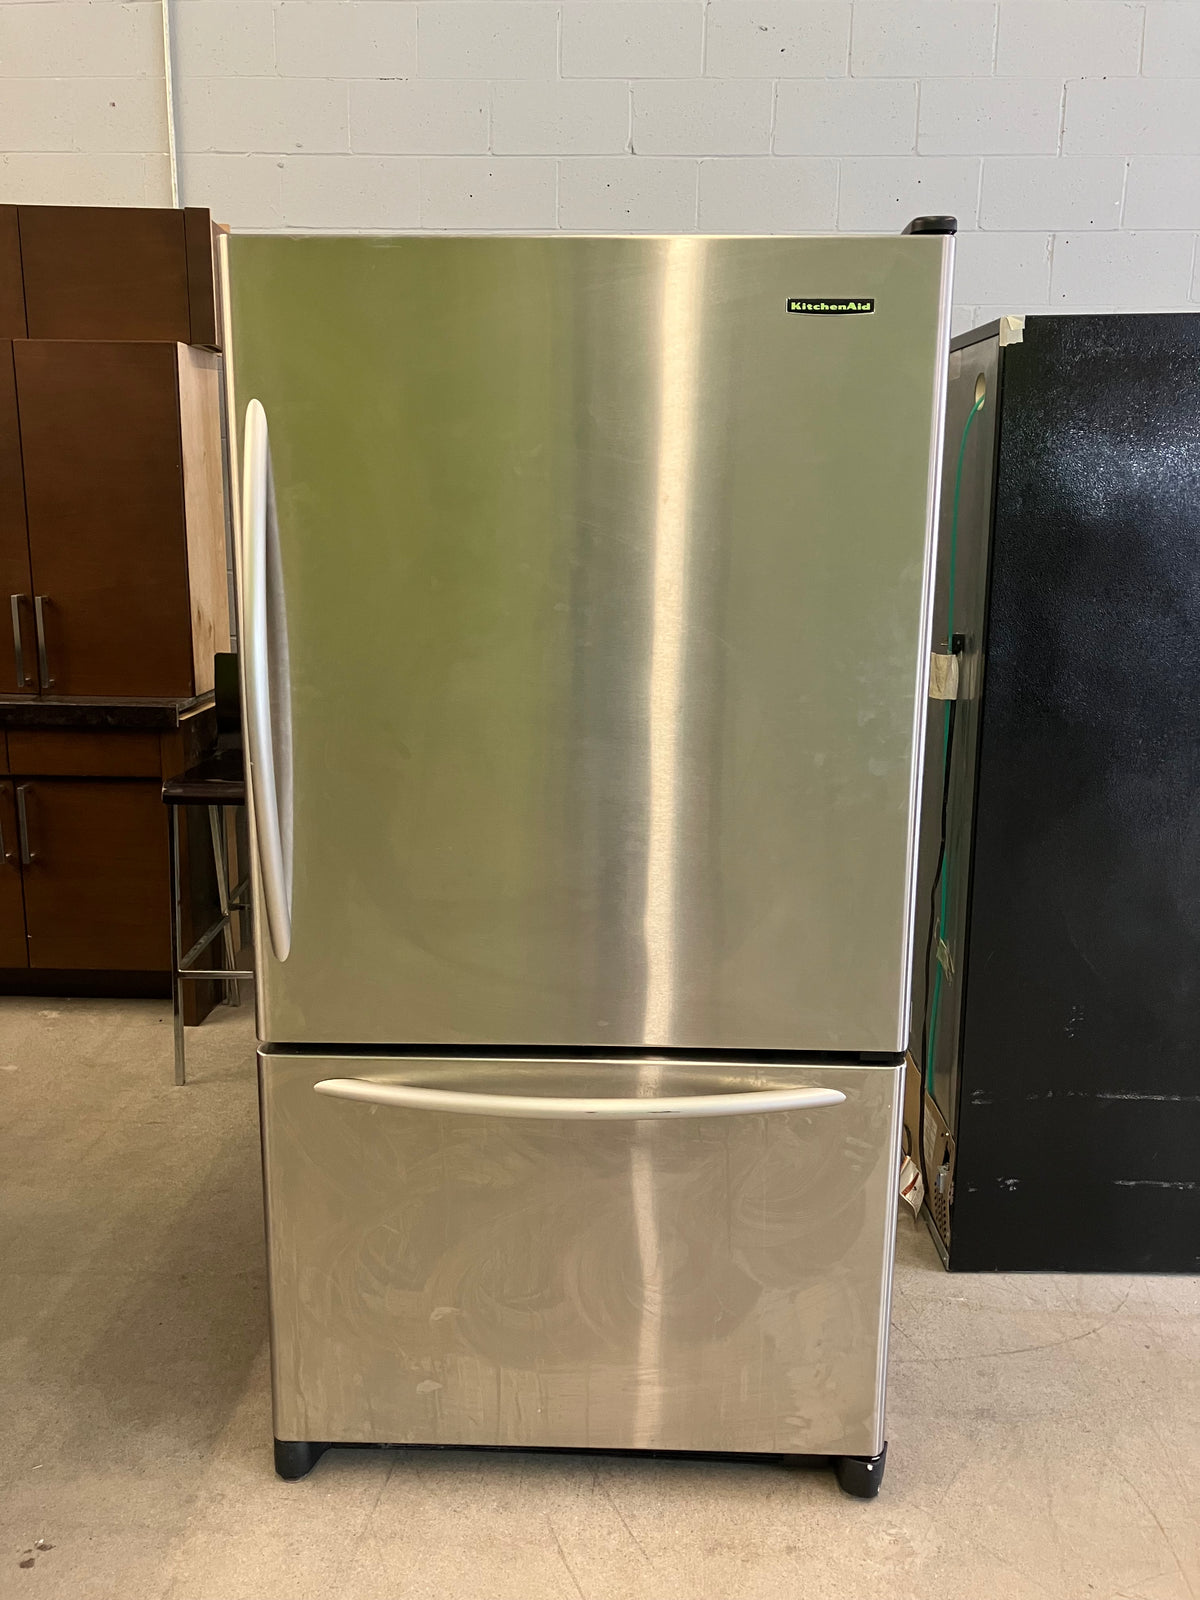 Stainless Steel KitchenAid Refrigerator